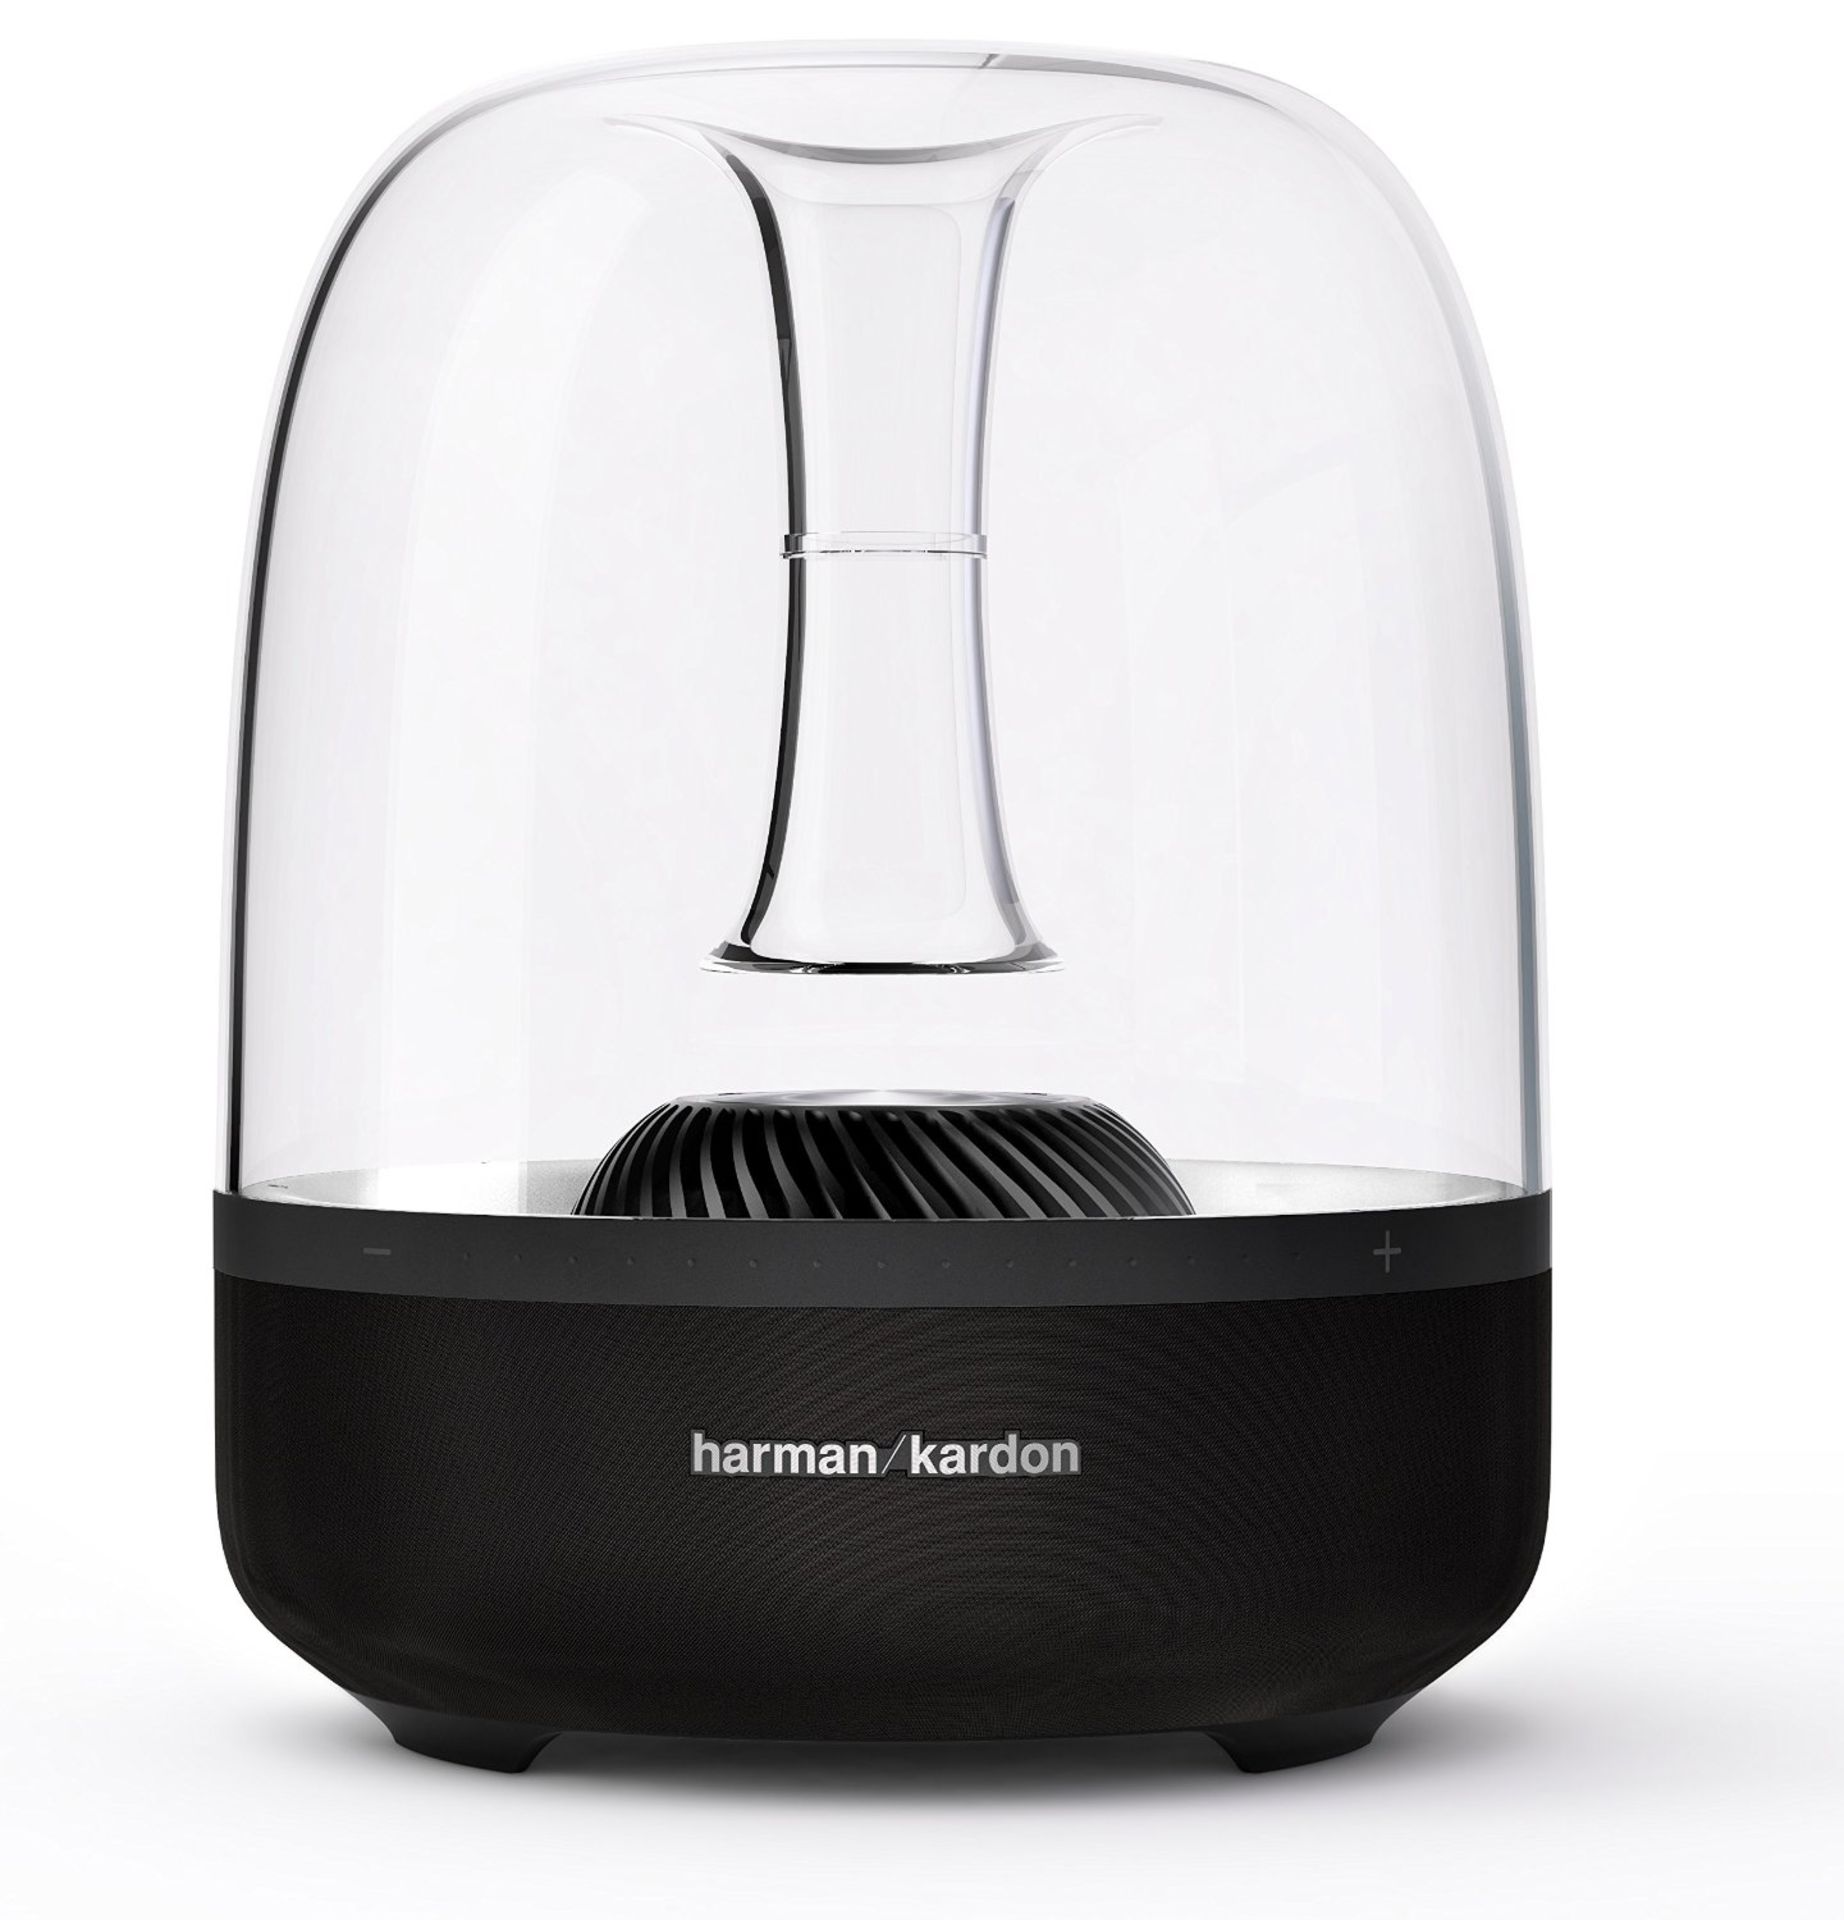 V Brand New Harman Kardon Aura Wireless Home Speaker System RRP £349.99 Amazon Price £311.20 With